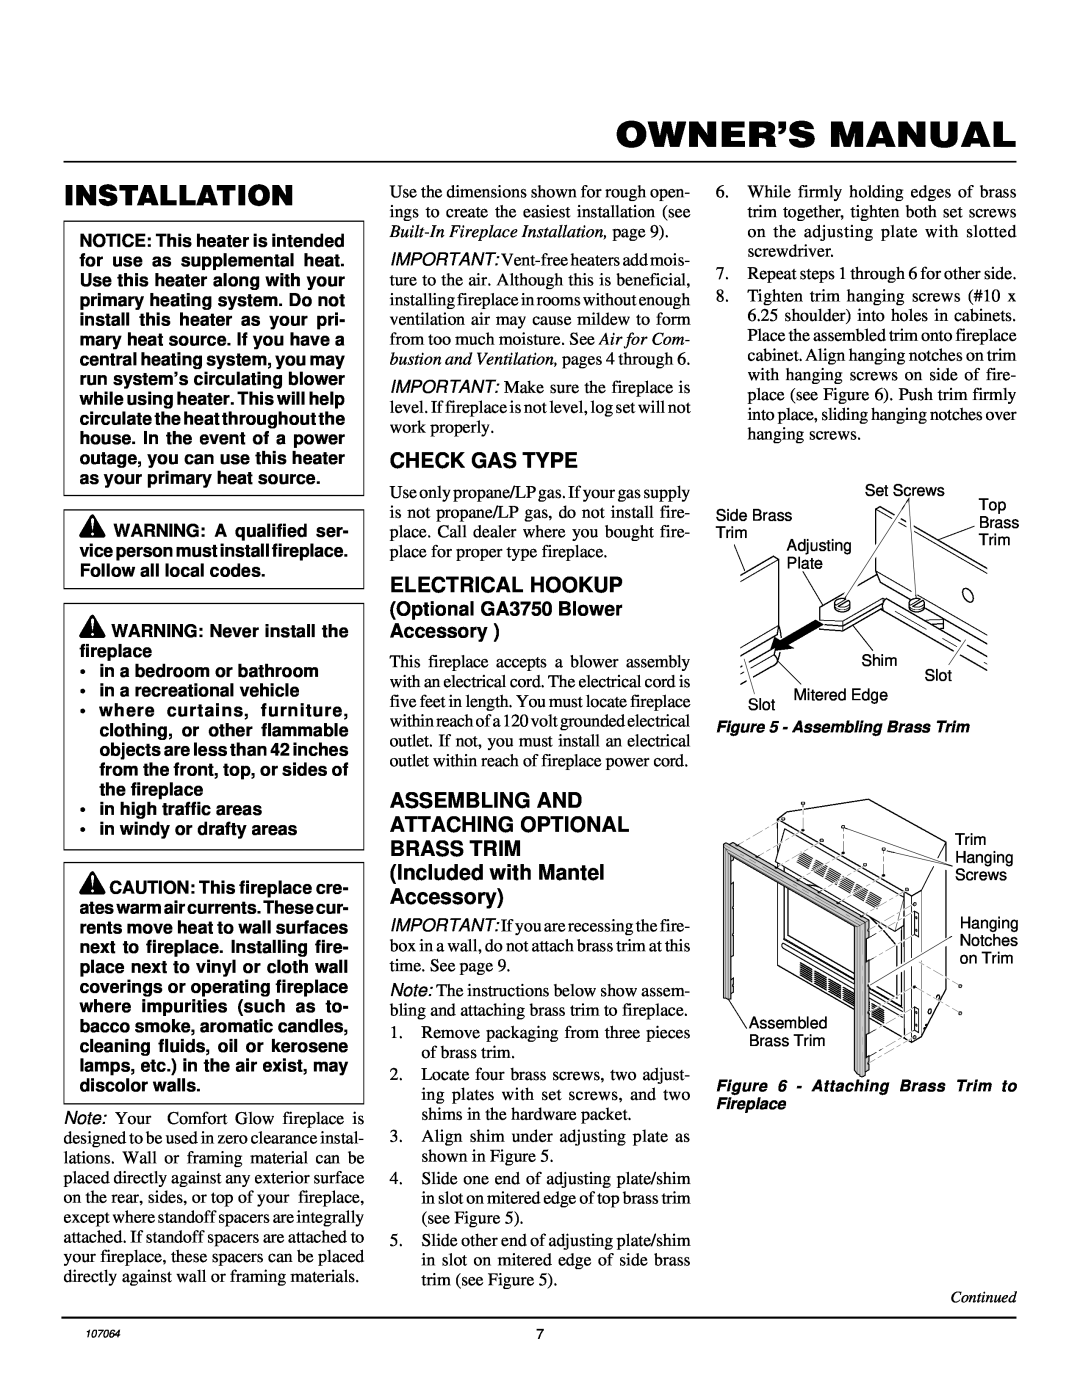 Desa LFP33PRA installation manual Installation, Check Gas Type, Electrical Hookup, Optional GA3750 Blower Accessory 